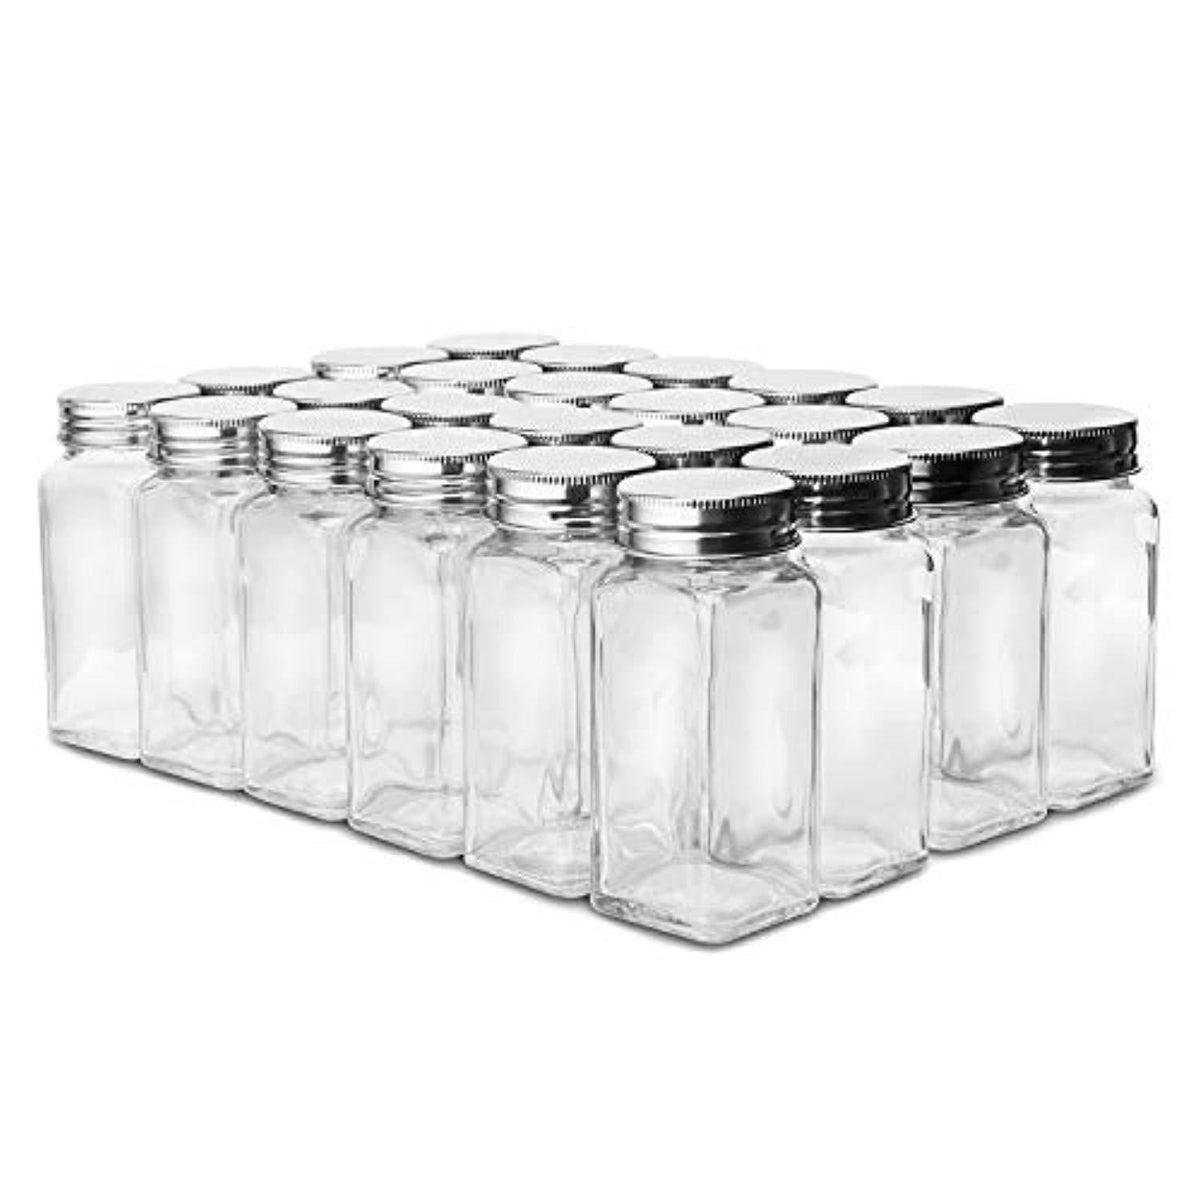 Aozita 24-piece Glass Spice Jars/Bottles [4oz] with Shaker Lids